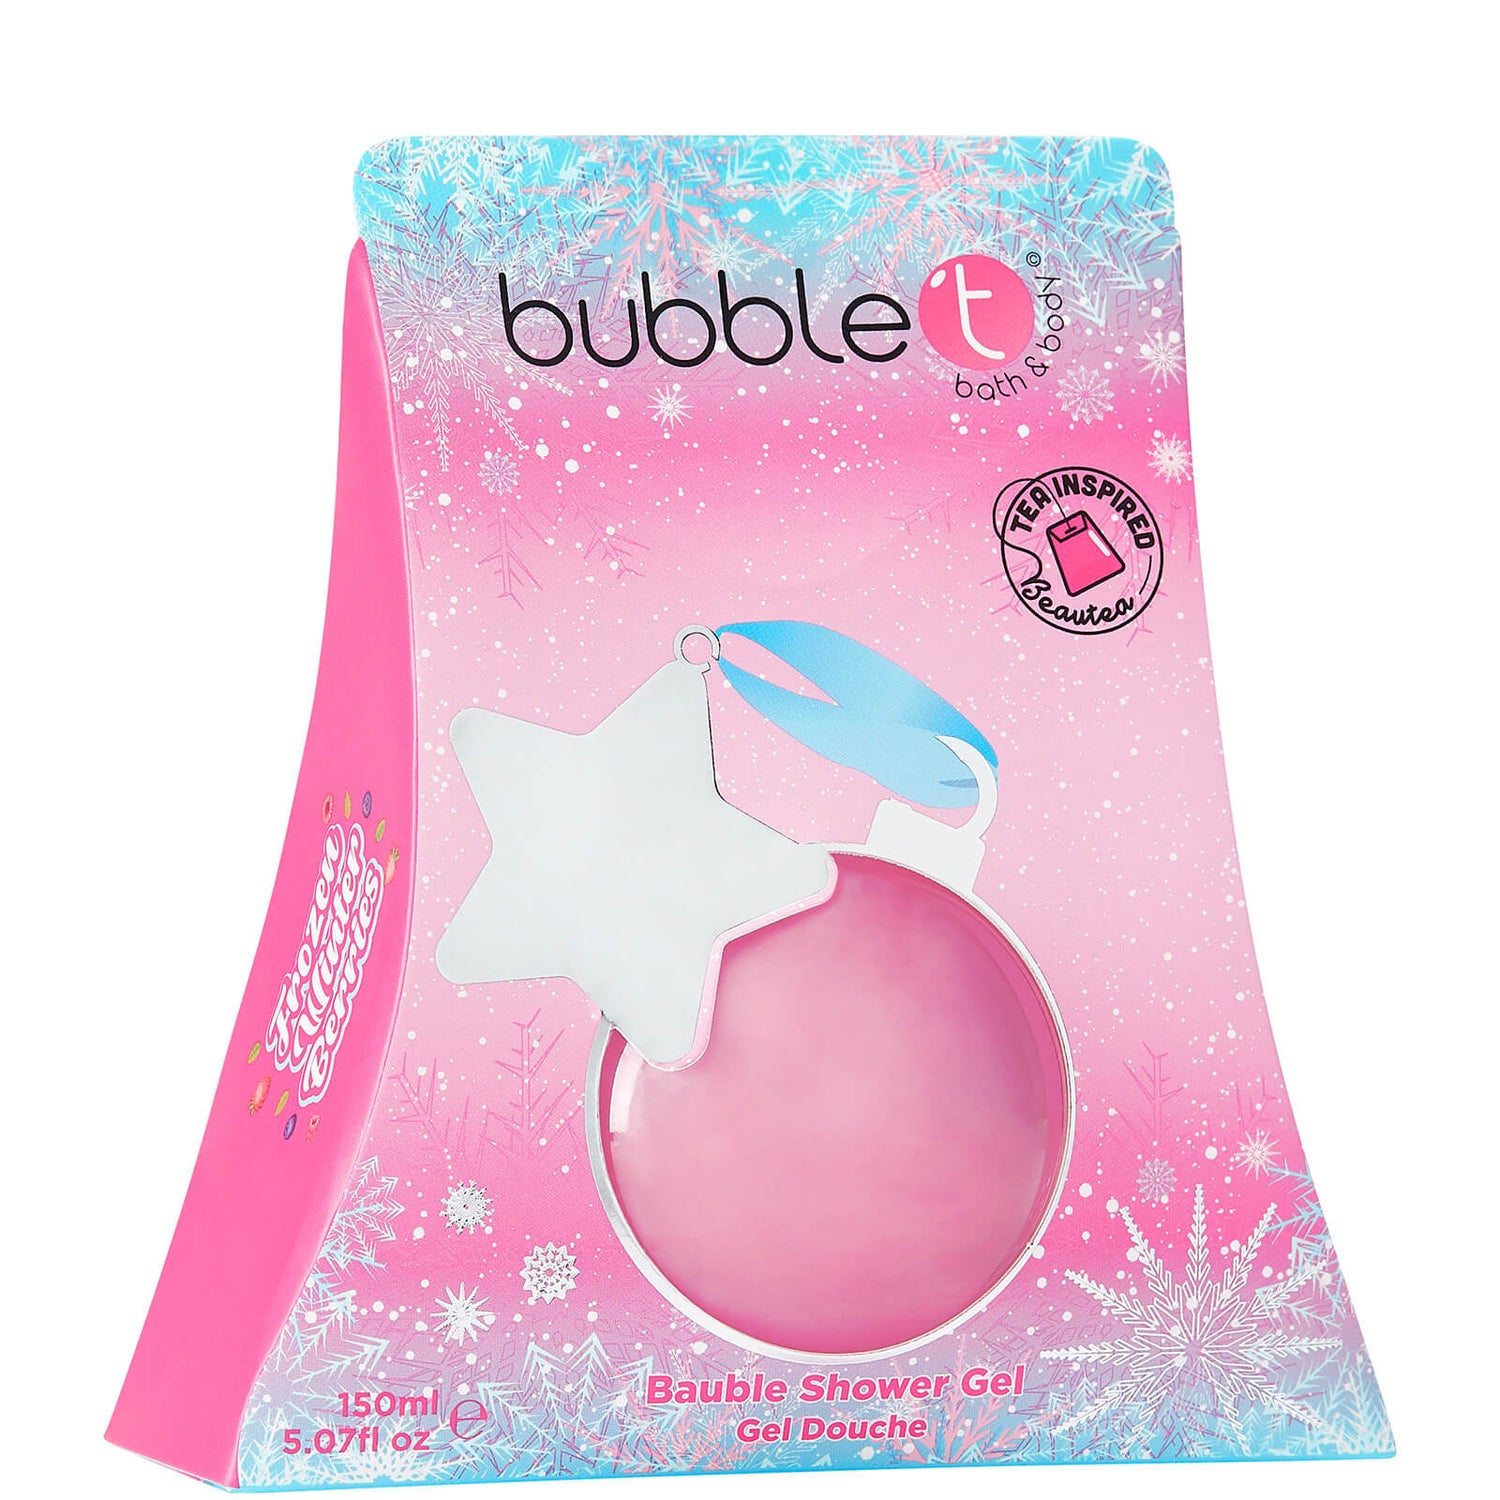 Bubble T Cosmetics Frozen Winter Berries Μπανιέρα και Μπουκάλι για το ντους